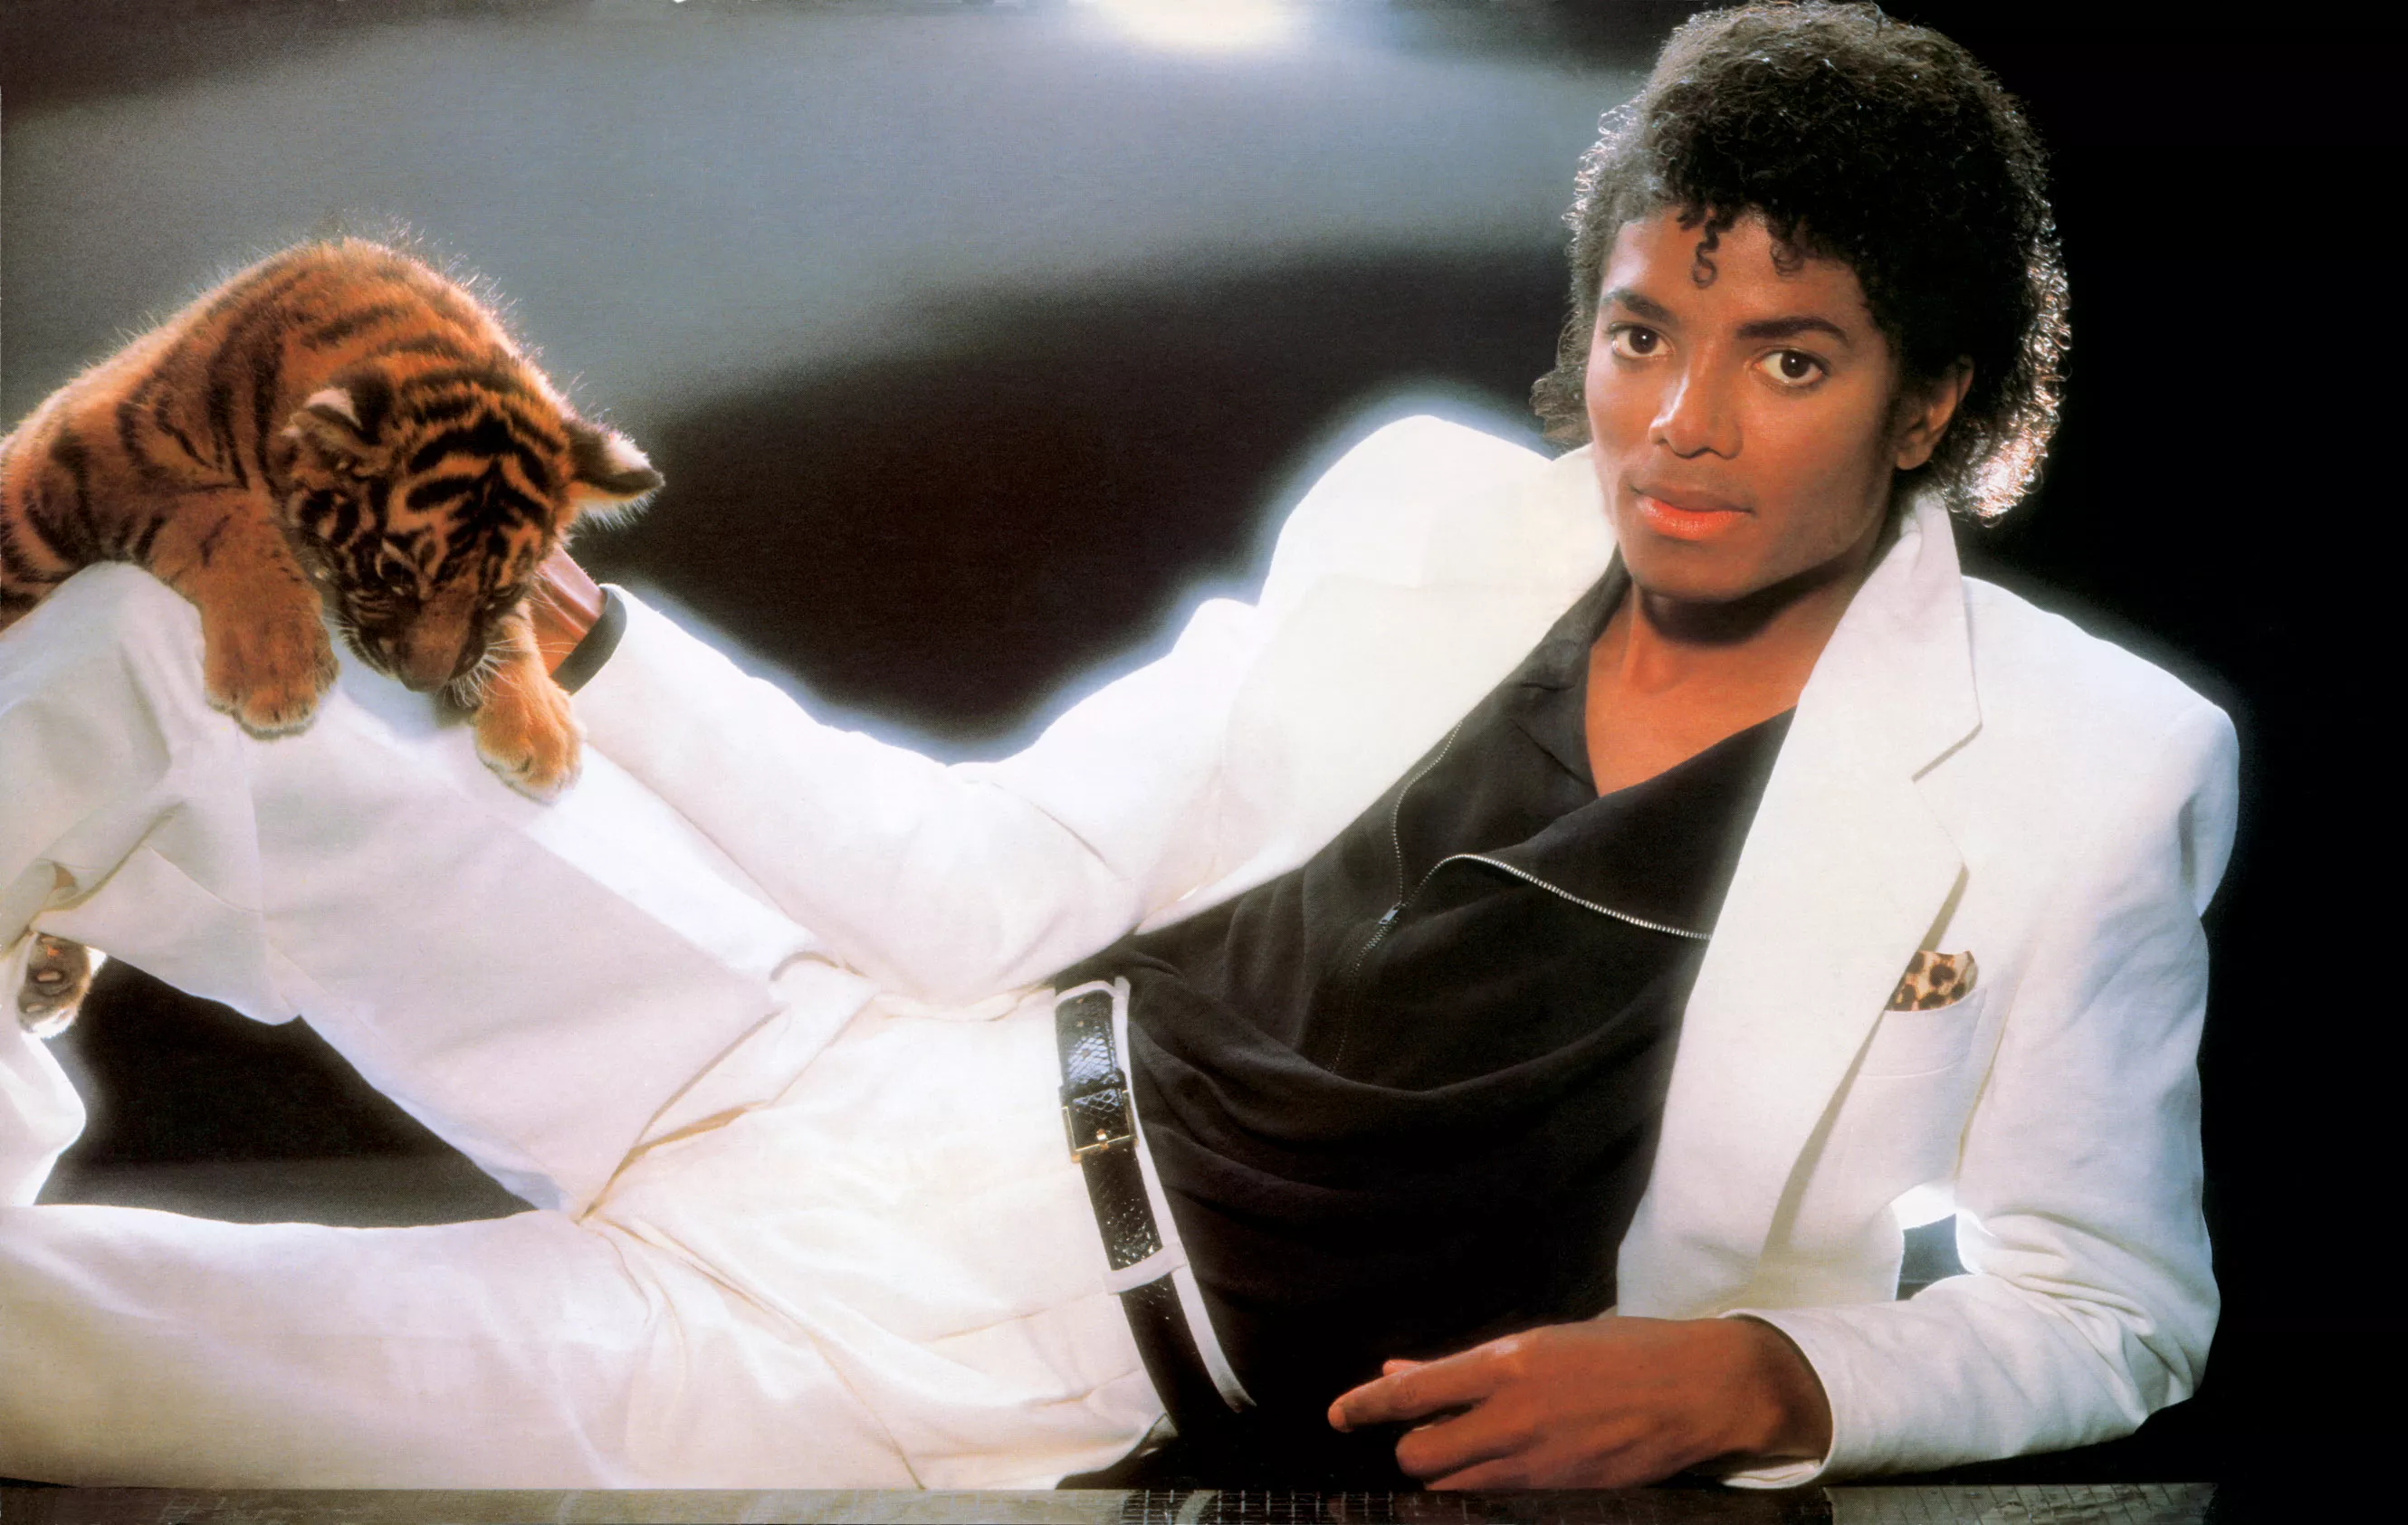 Producer Quincy Jones: – Michael Jackson stjal sange